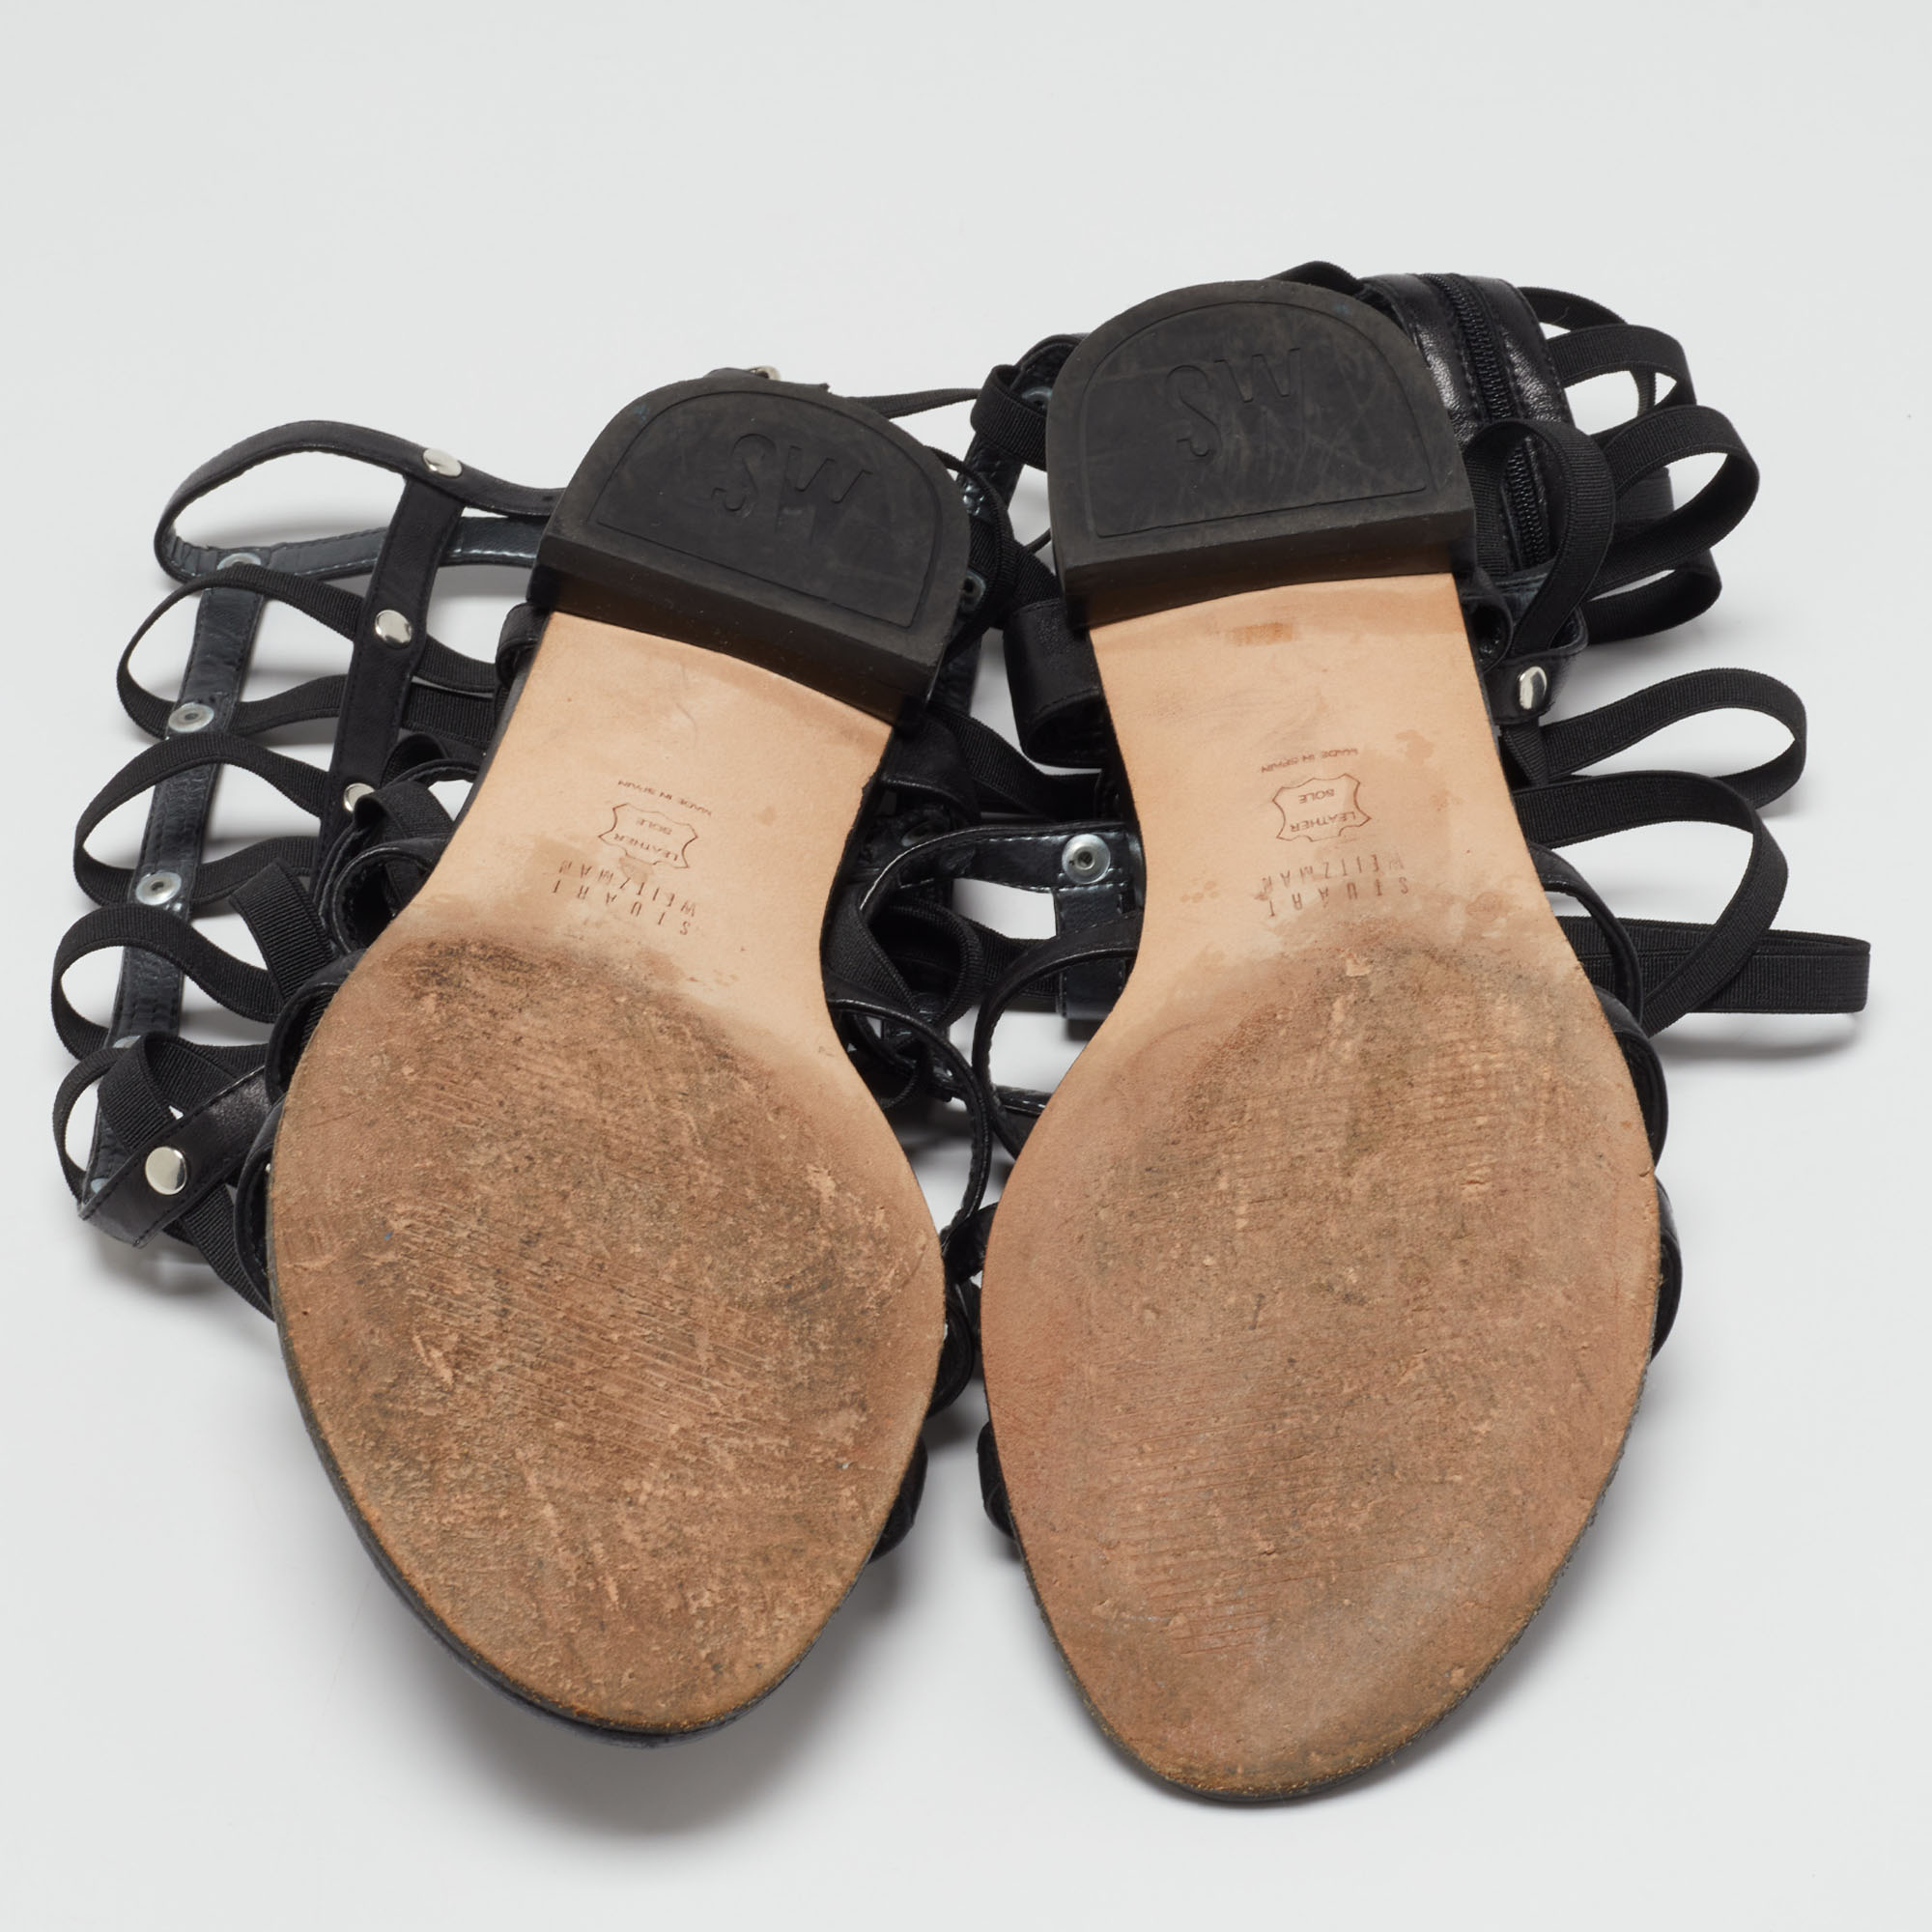 Stuart Weitzman Black Leather Gladiator Sandals Size 39